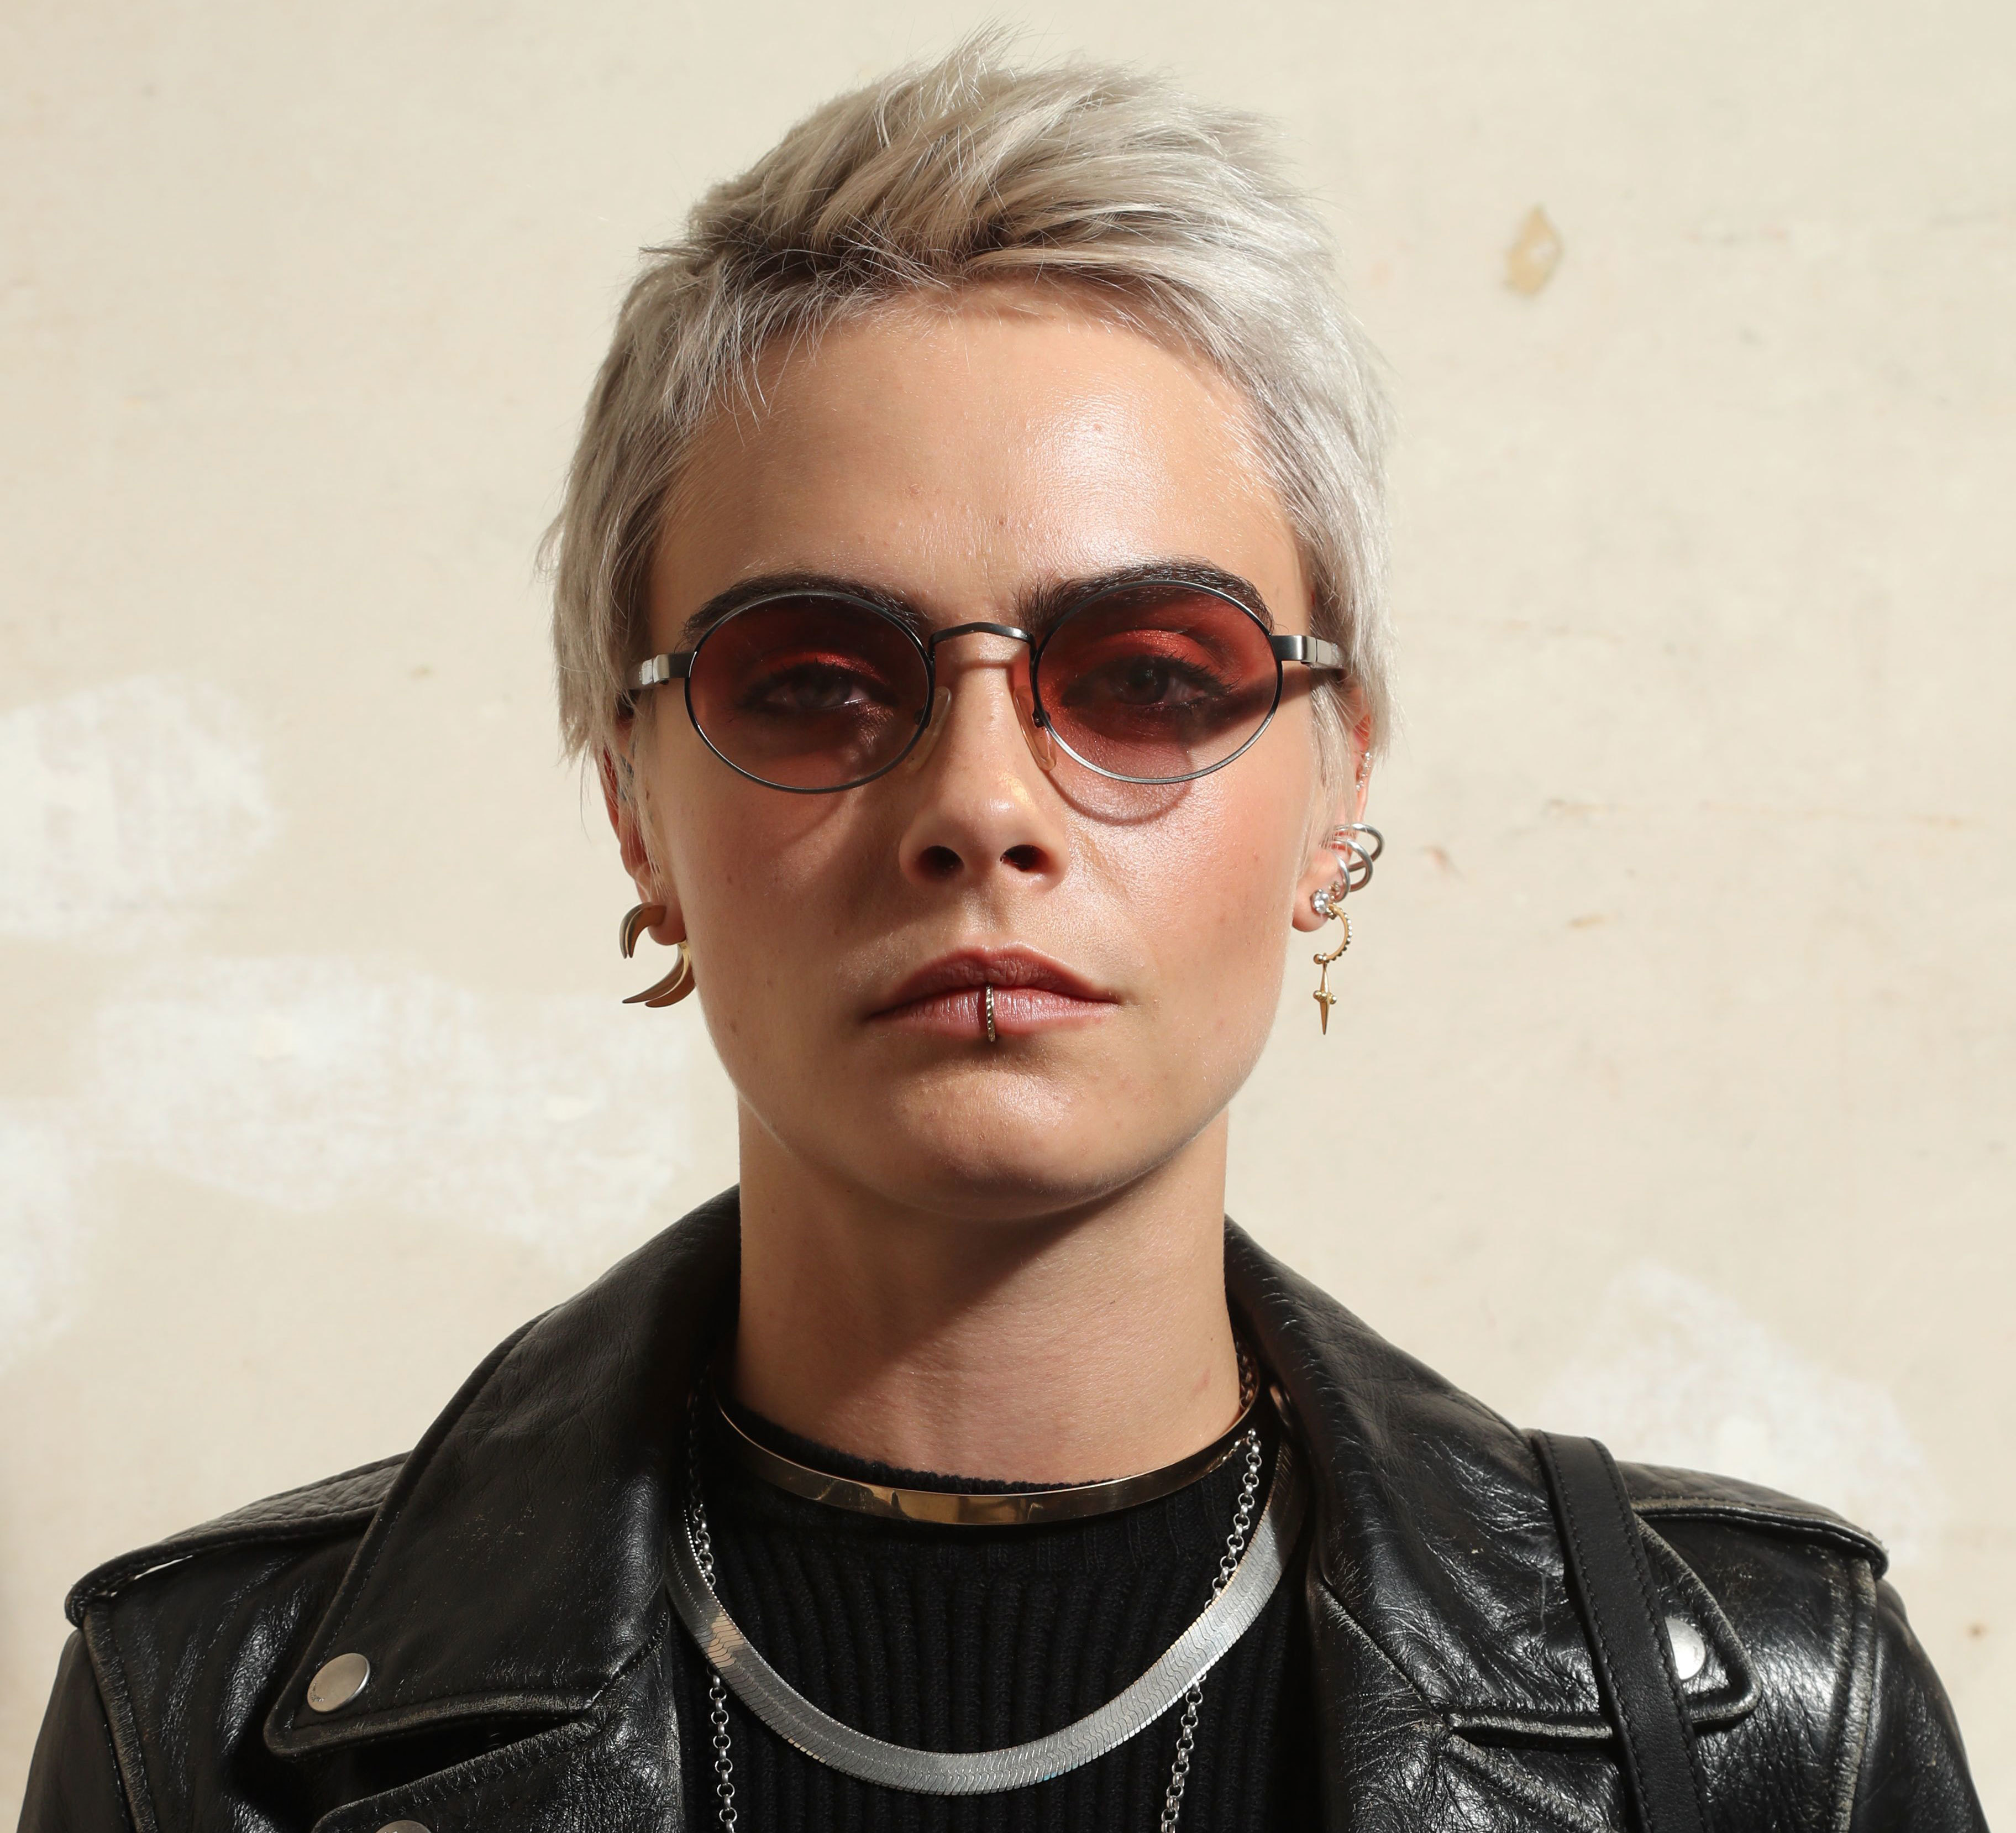 Cara Delevingne In Sunglasses 2019 Wallpapers